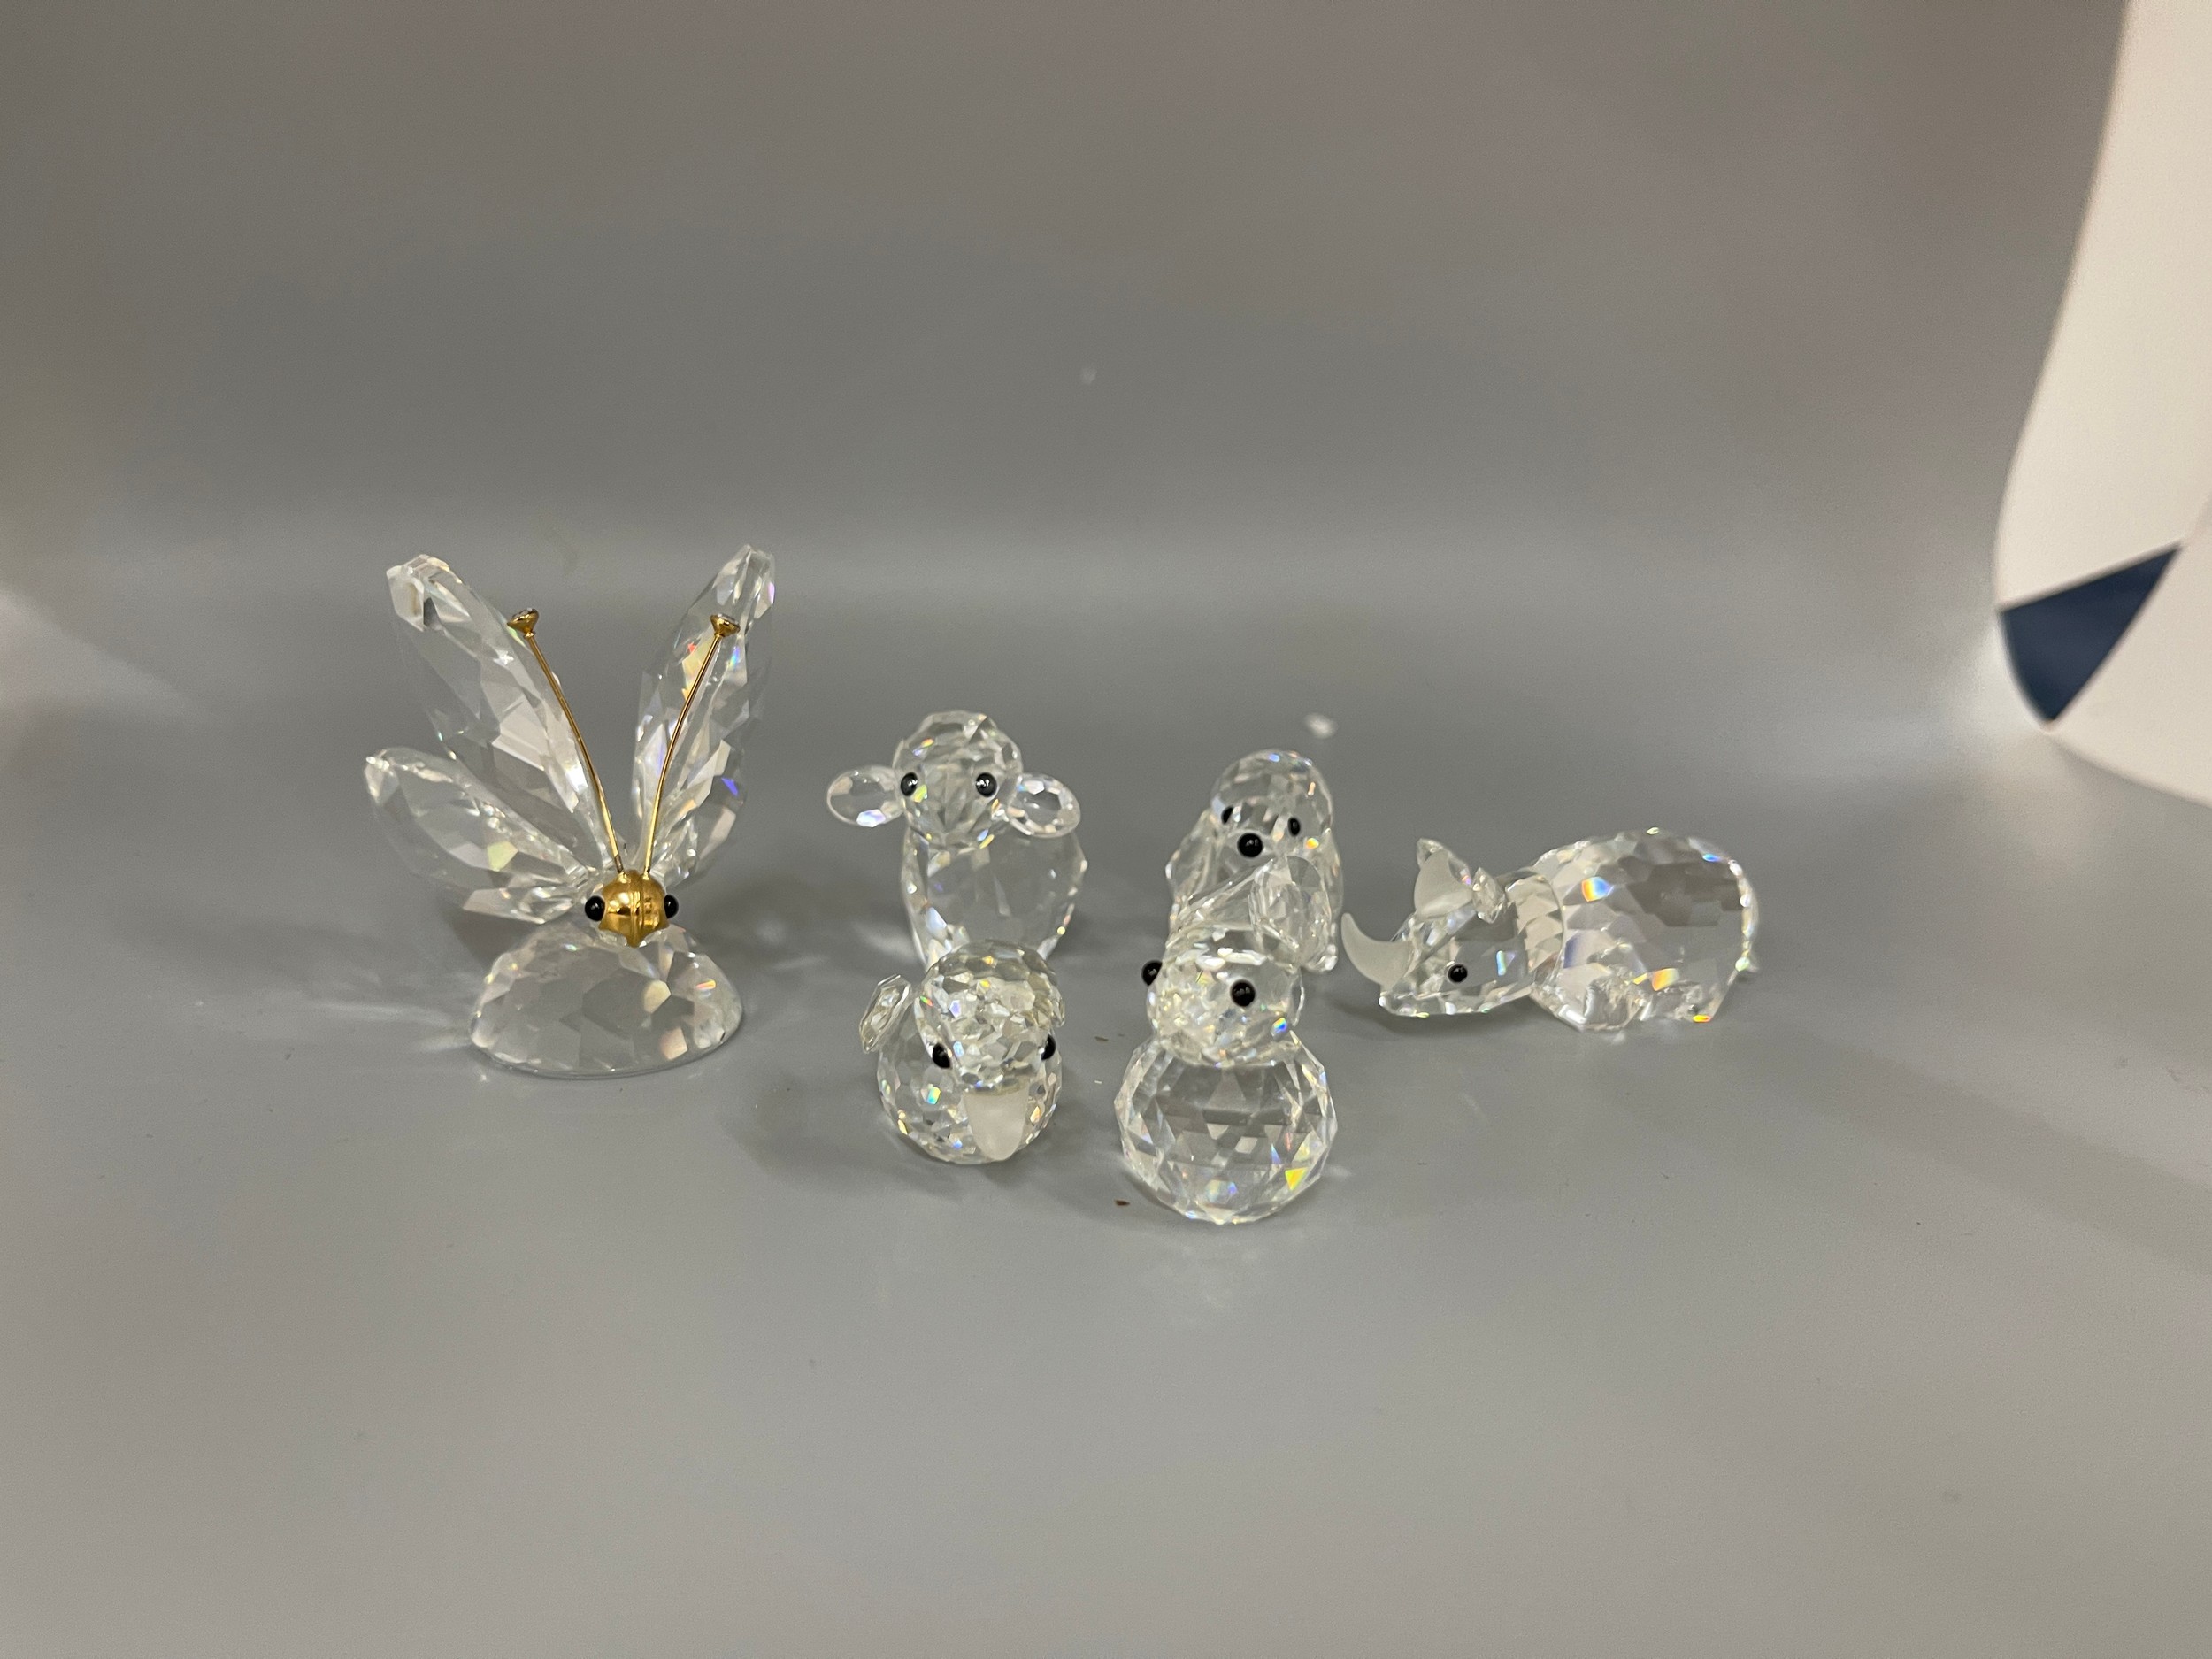 Selection of 6 Swarvoski glass figures includes Butterfly, lamb, rhino etc